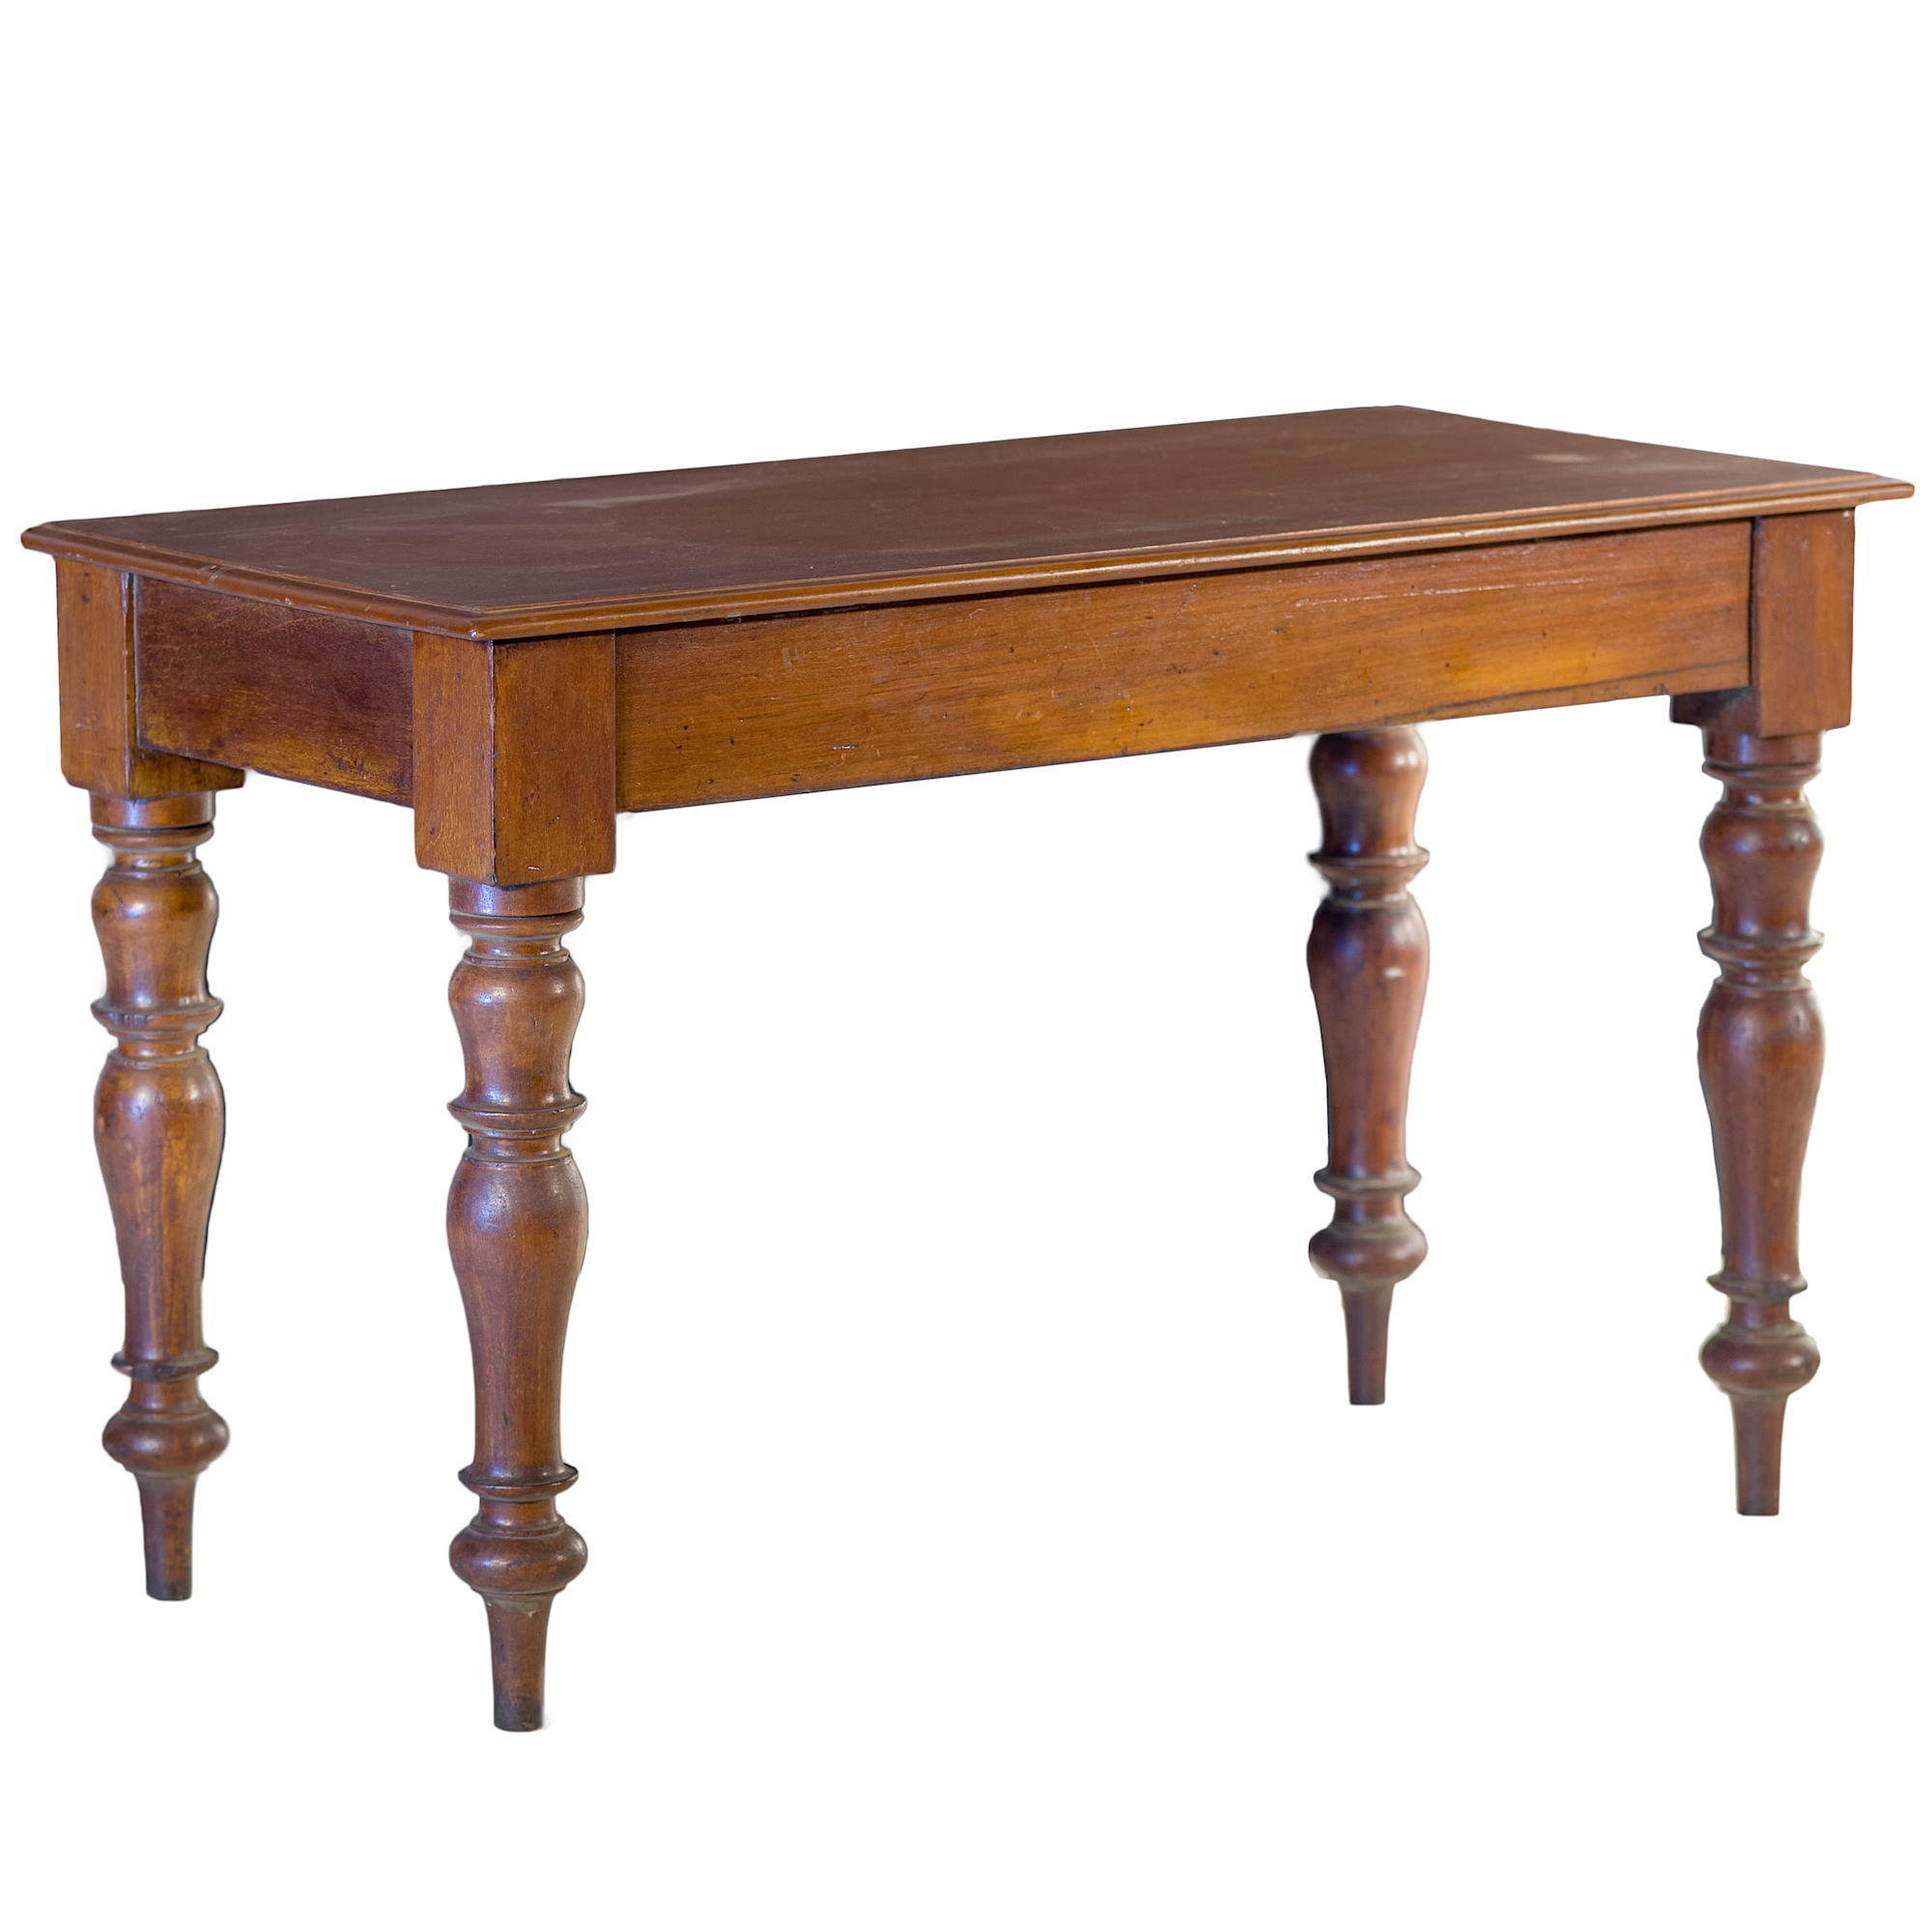 'Australian Cedar Side Table Late 19th Century'